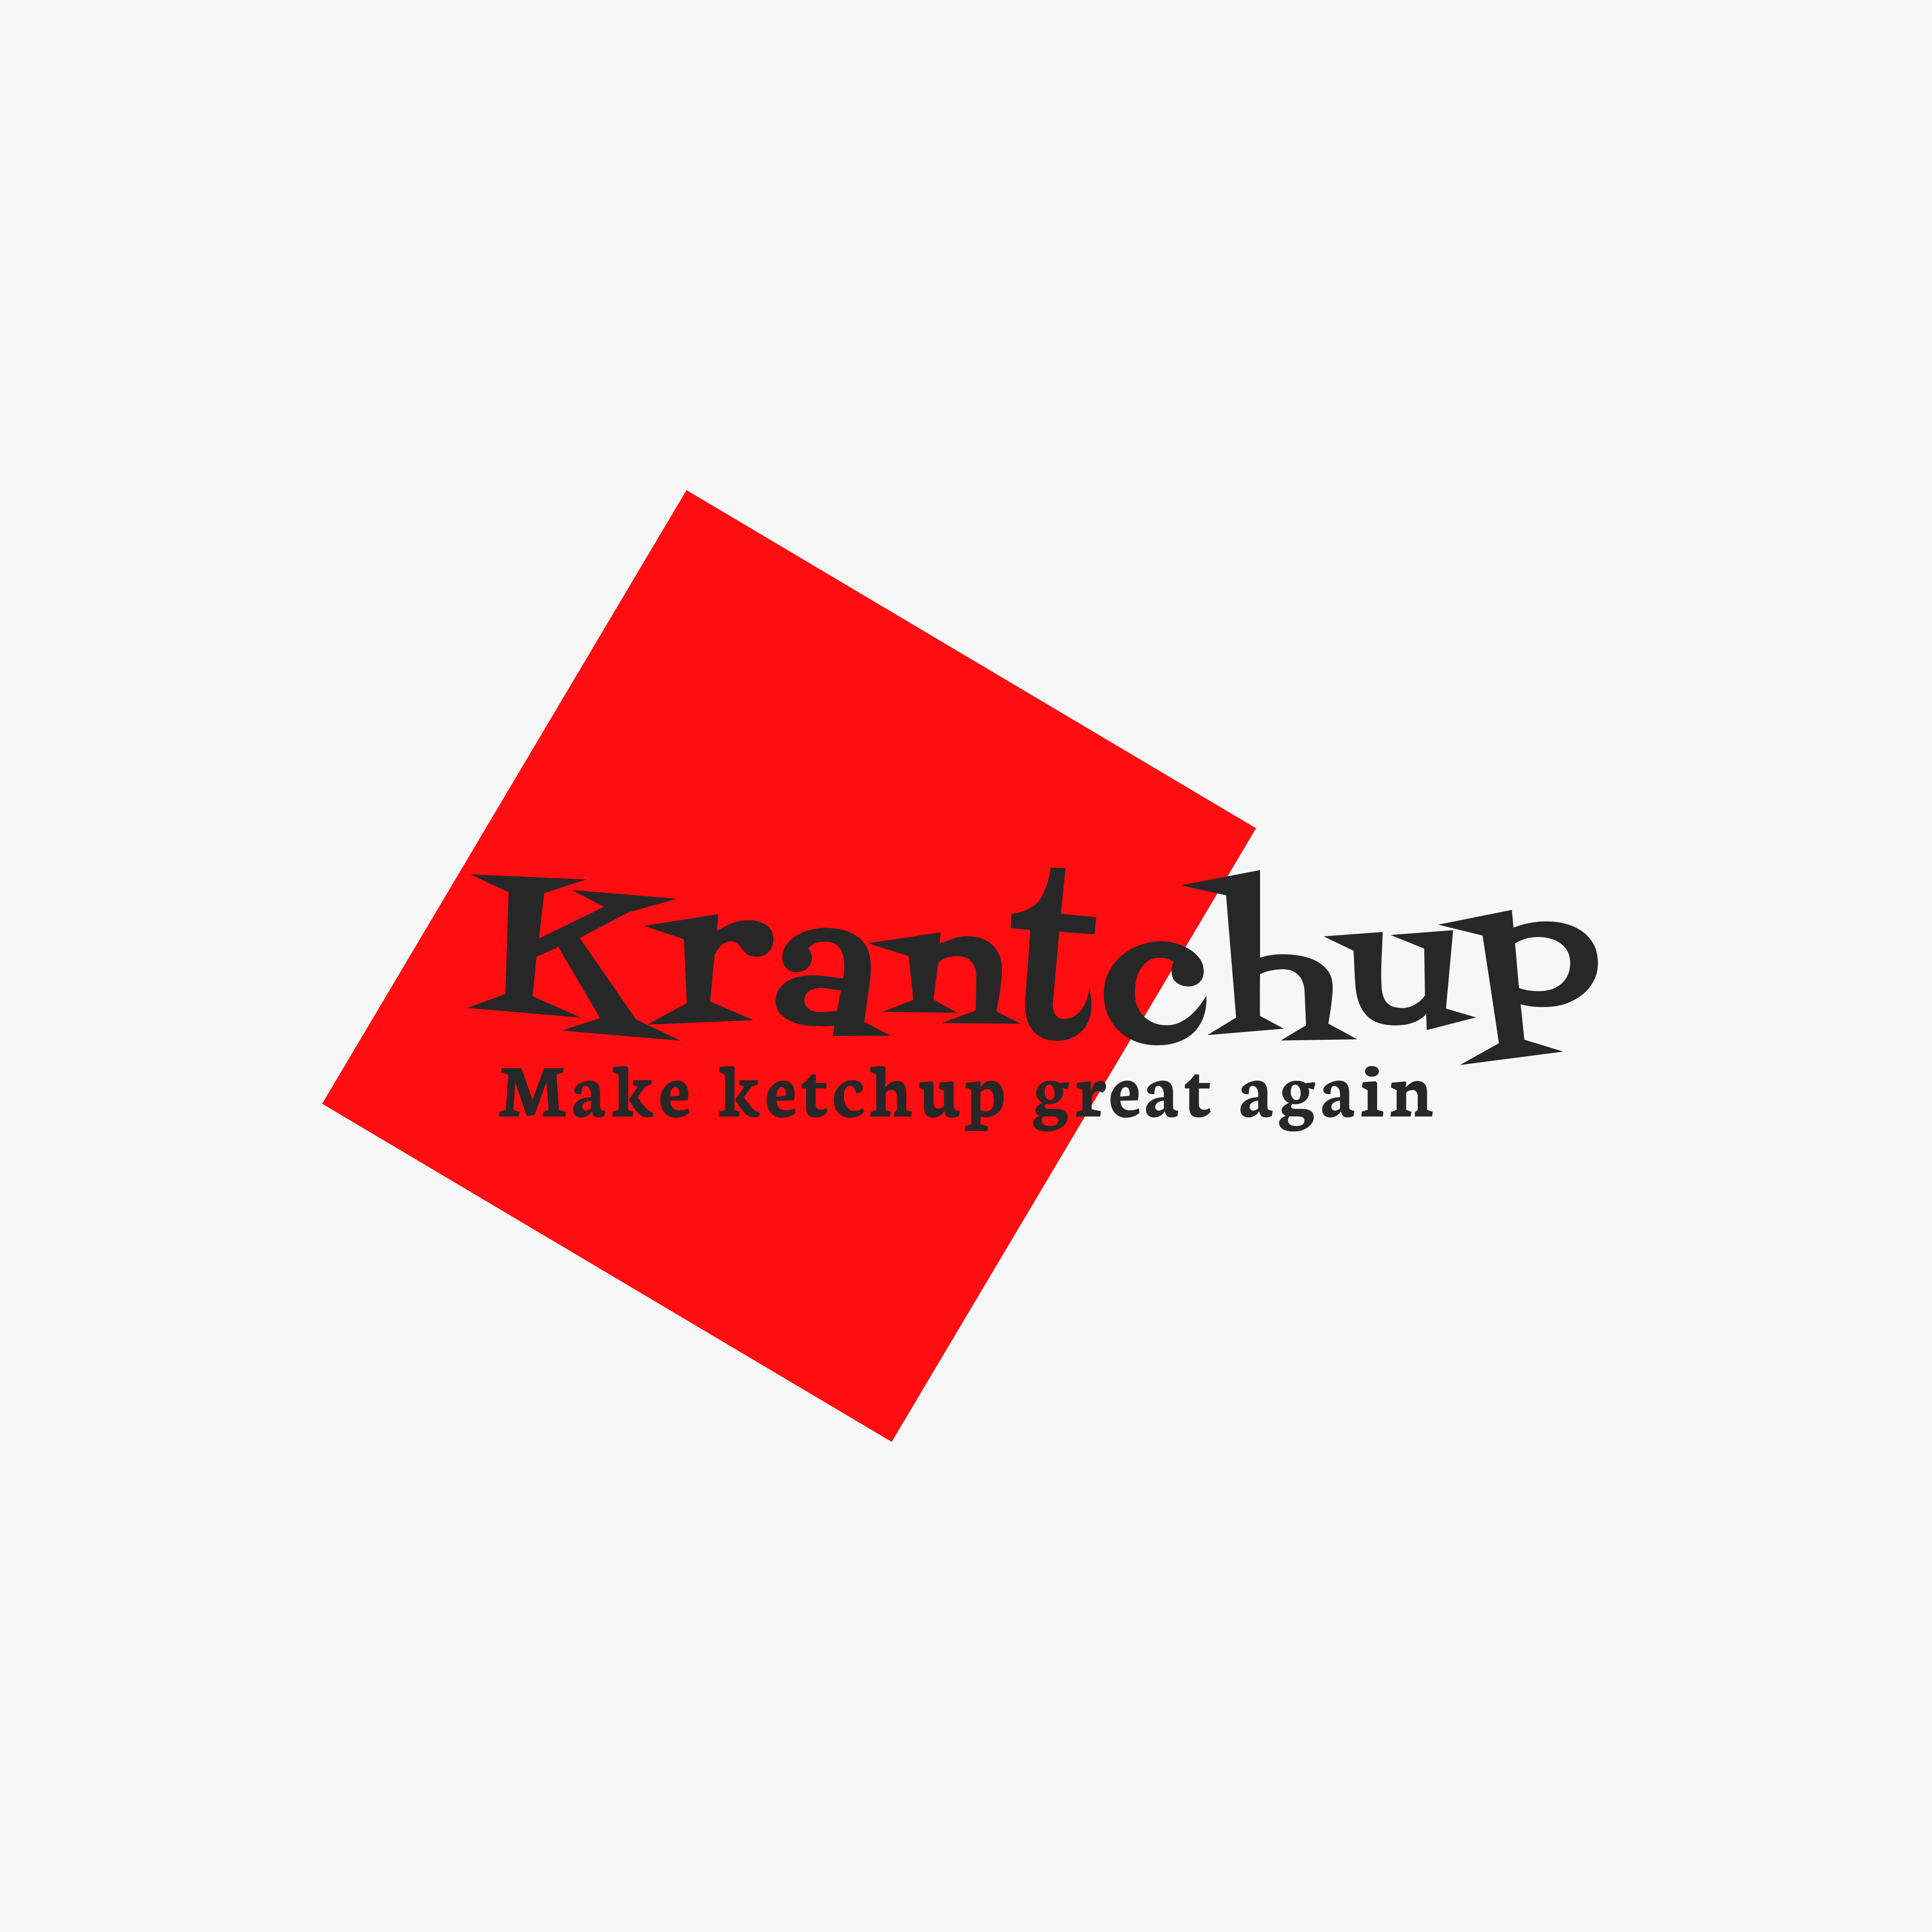 Krantchup